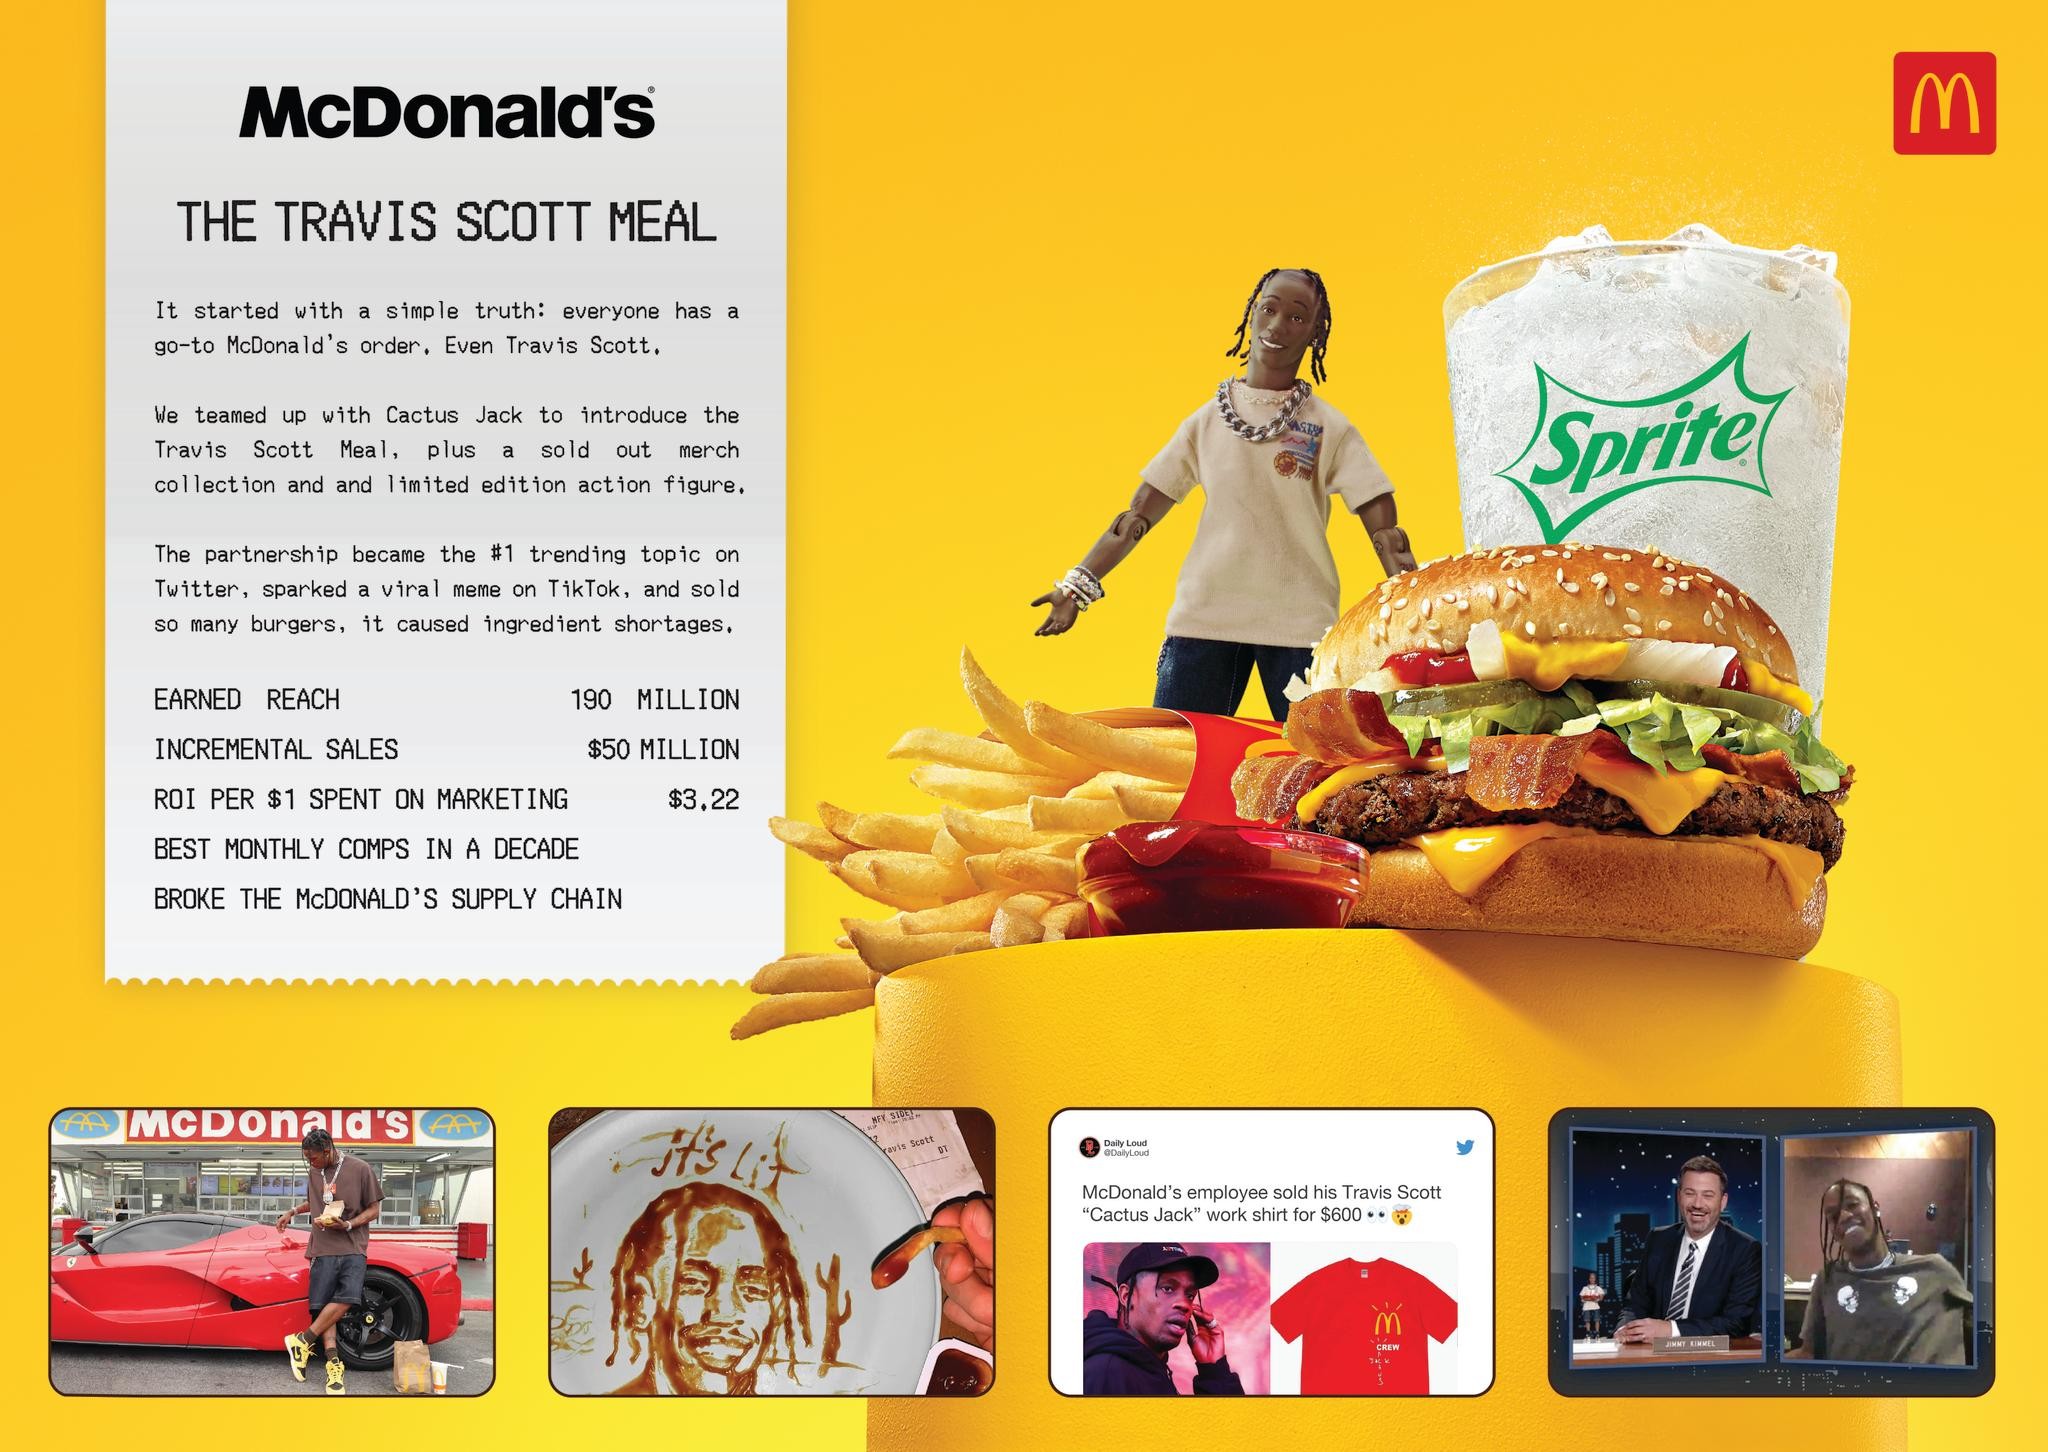 McDonald's: The Travis Scott Meal